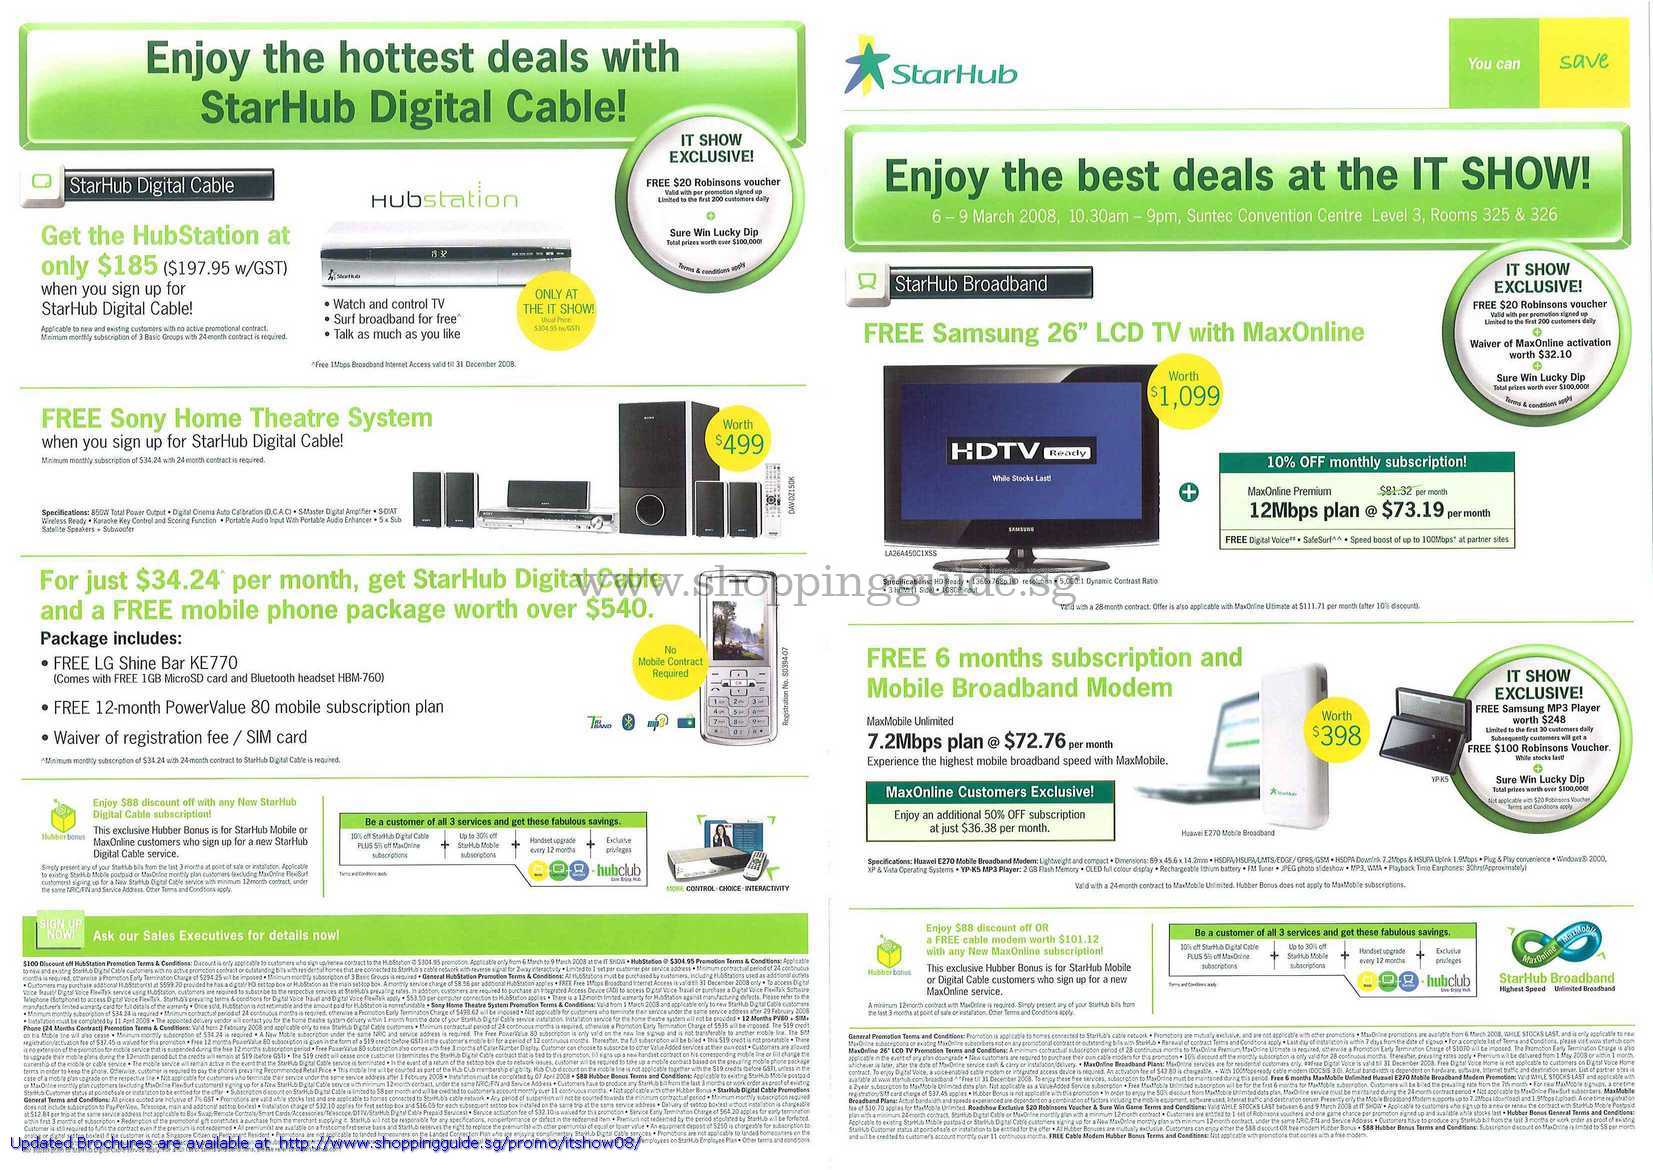 IT Show 2008 price list image brochure of Starhub Digital Cable HubStation Sony Home Theatre LG Shine Samsung LCD TV MaxOnline